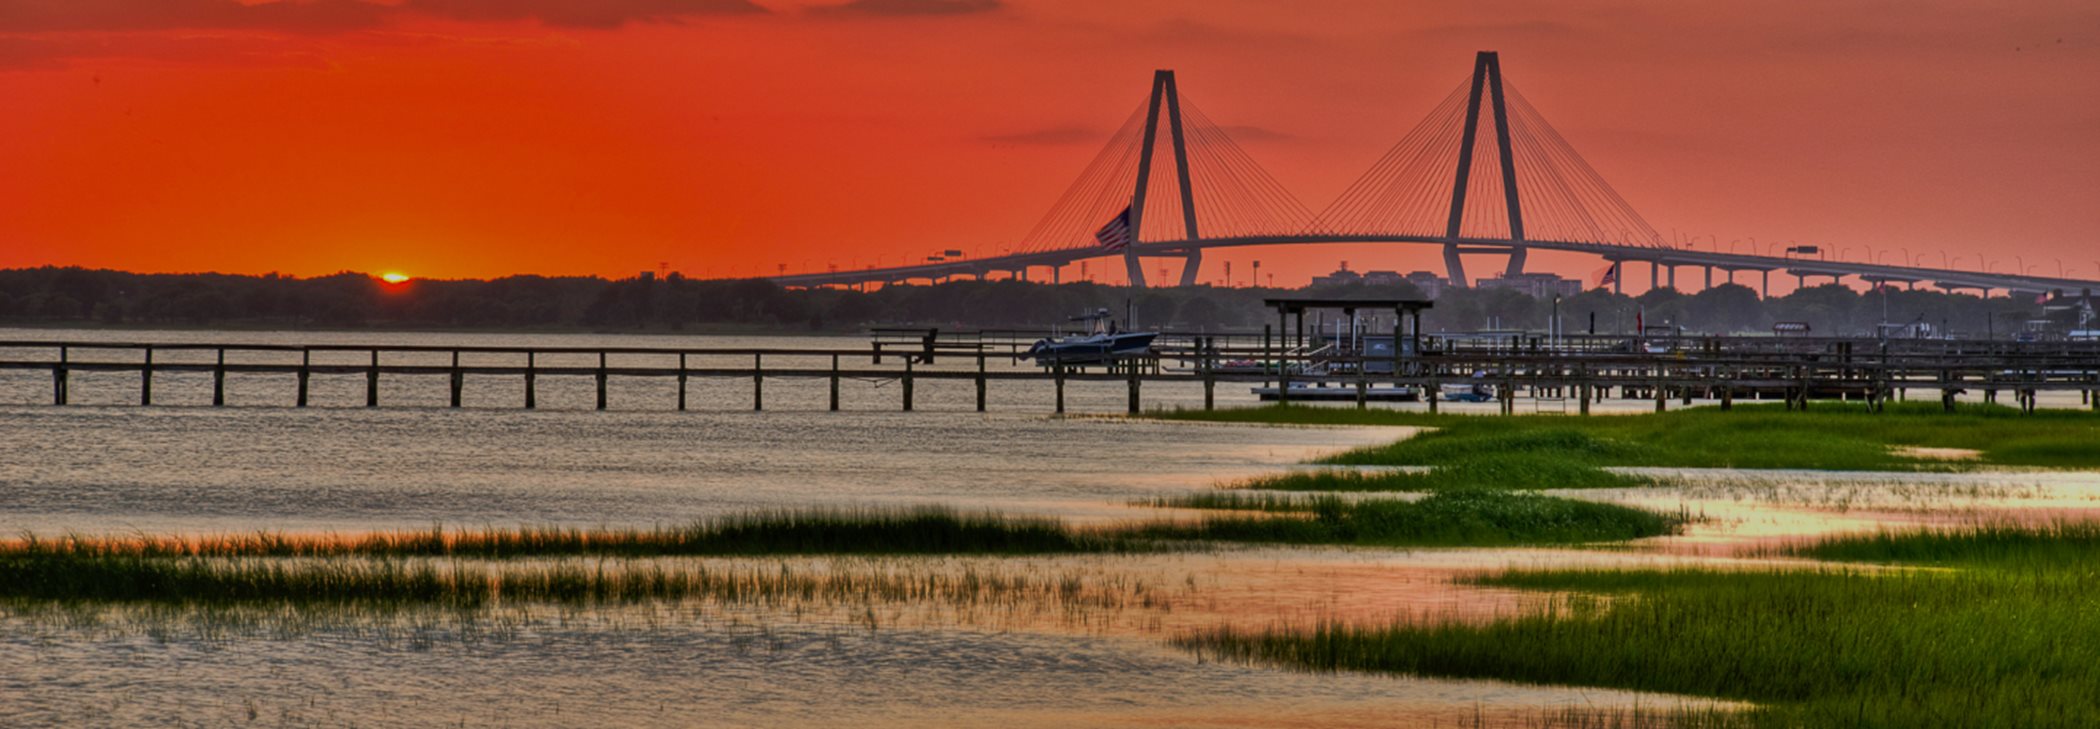 Charleston Arthur Ravenel Jr. Bridge